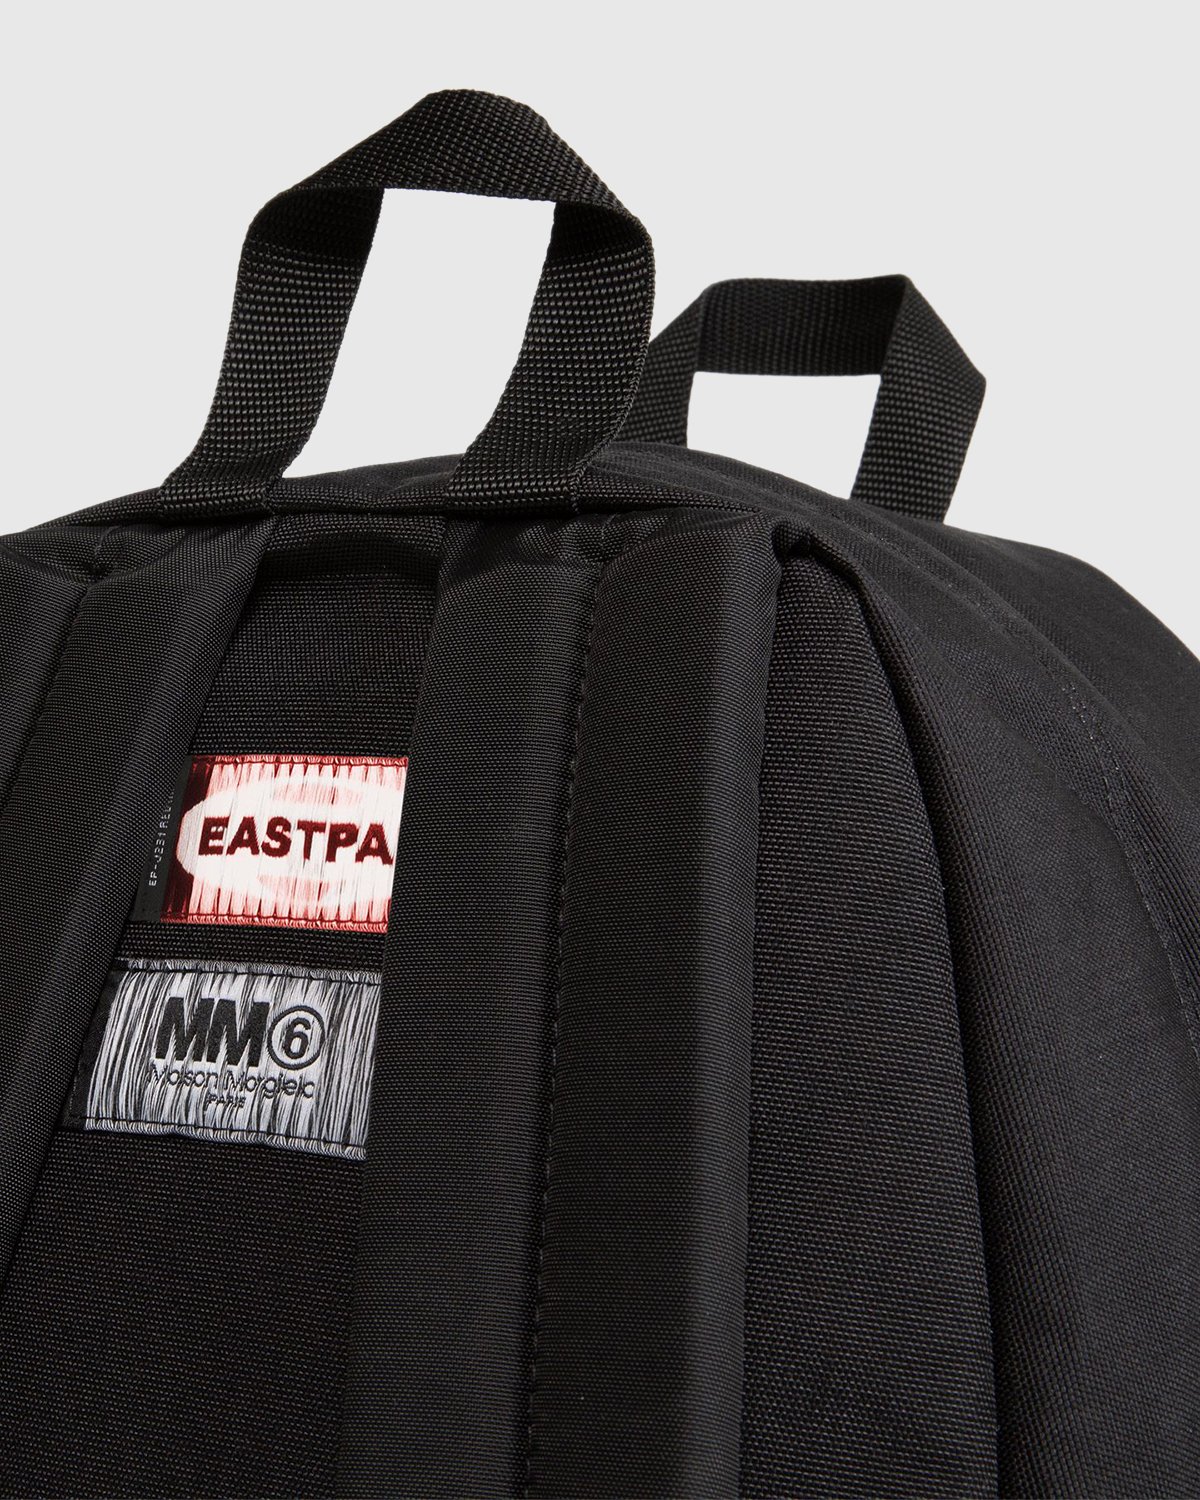 MM6 Maison Margiela x Eastpak - Padded XL Backpack Black - Accessories - Black - Image 4